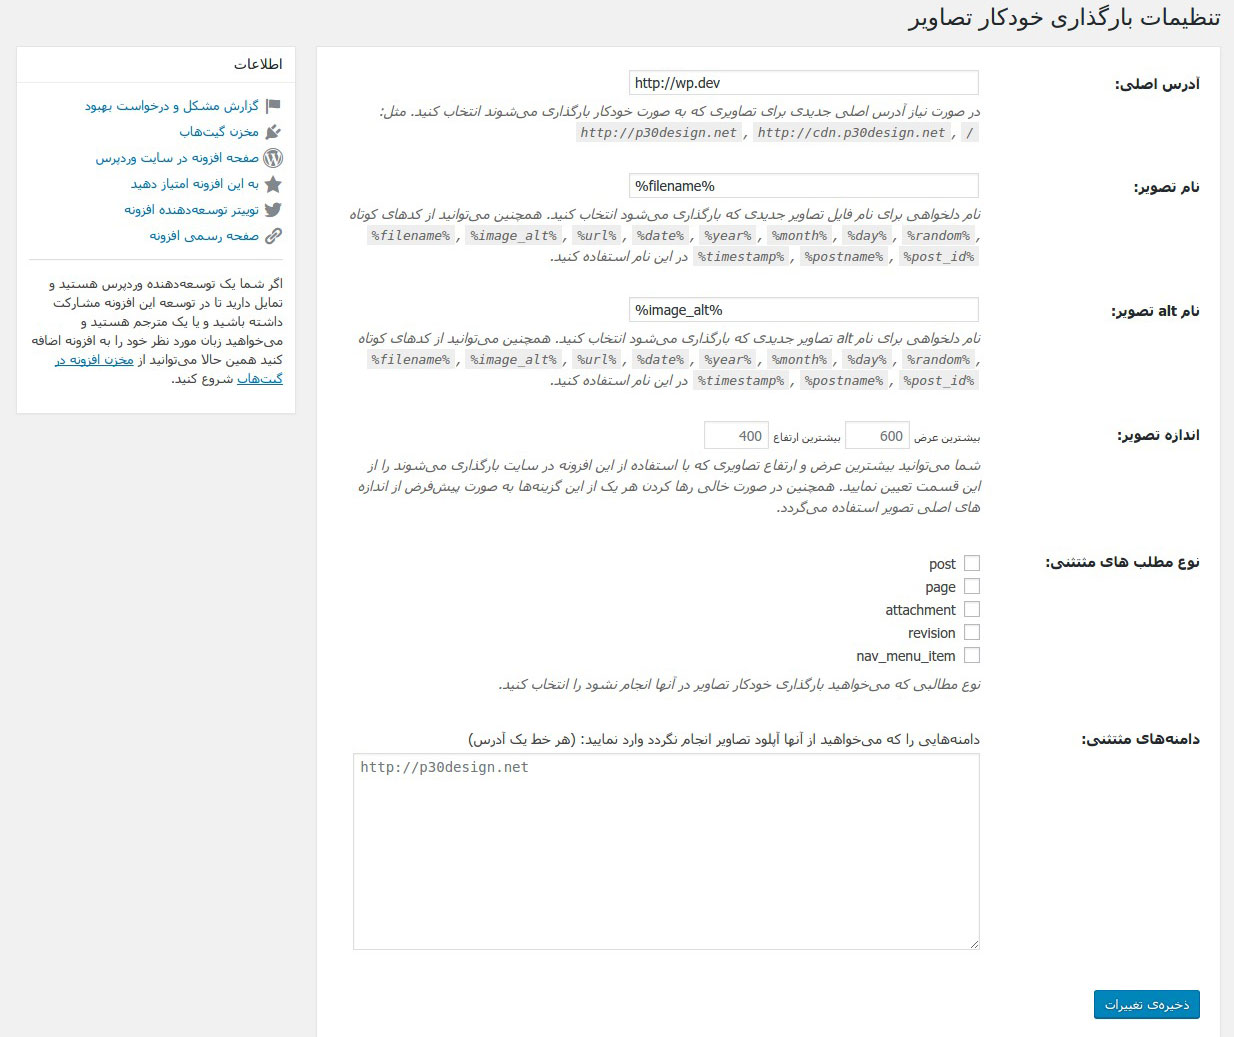 2. Settings page in Persian language